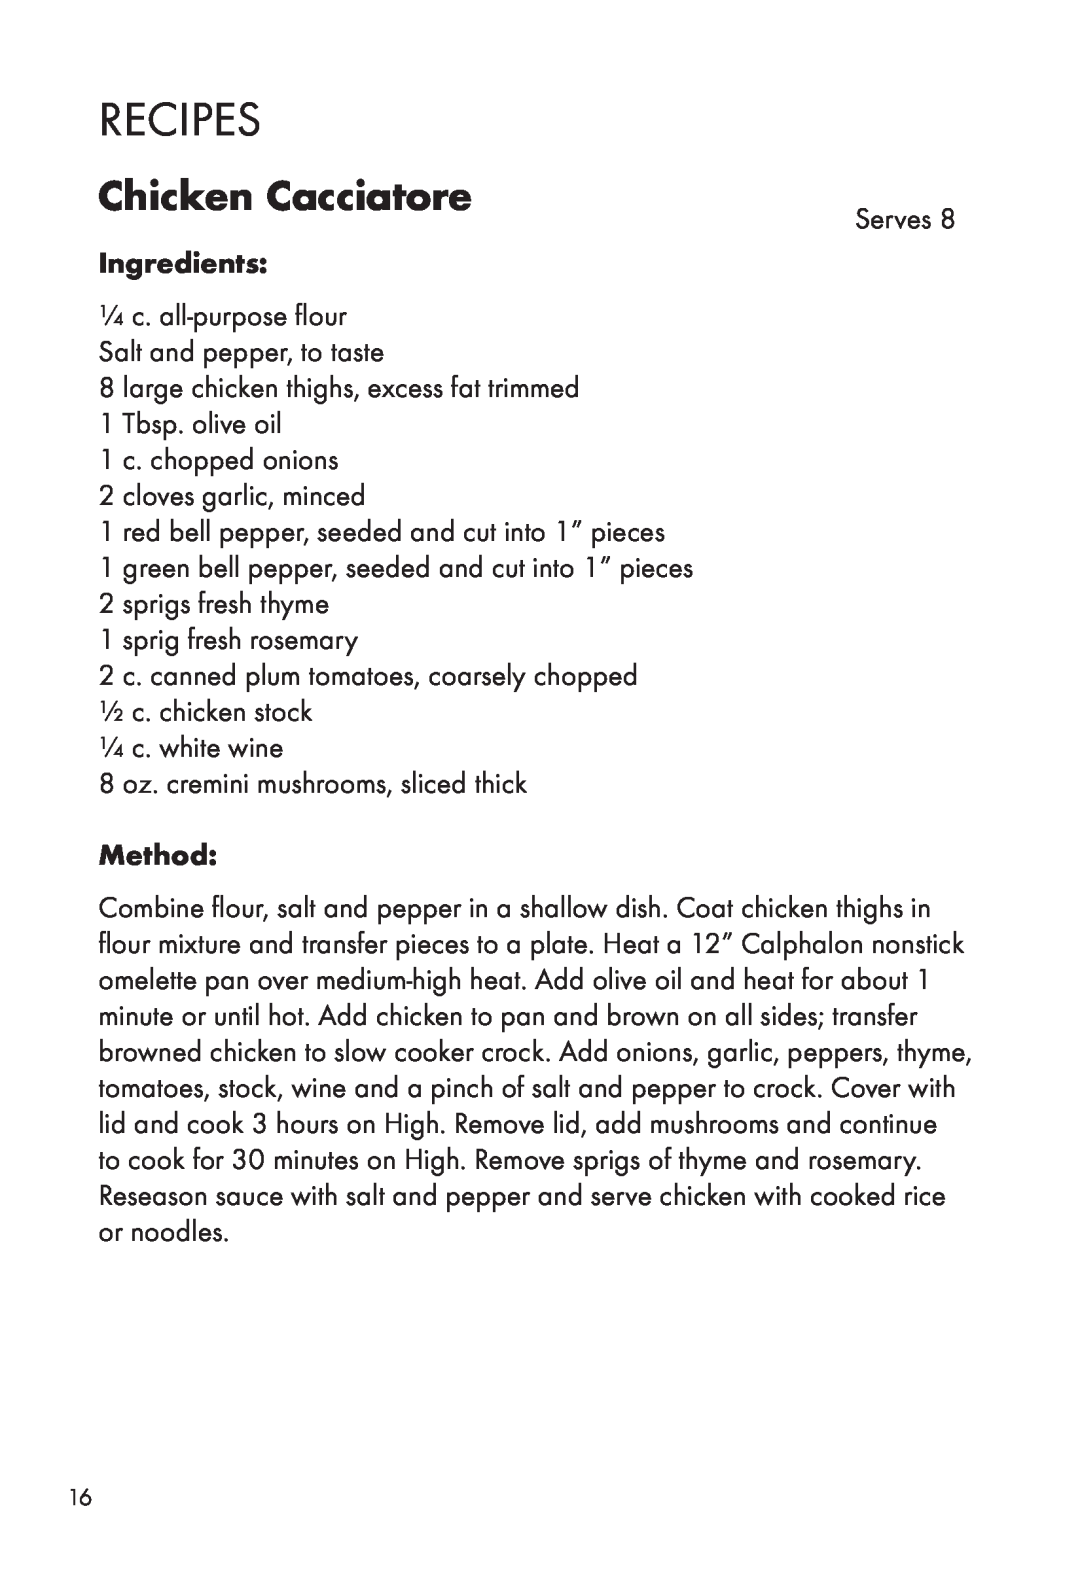 Calphalon HE400SC manual Recipes, Chicken Cacciatore, Ingredients, Method 